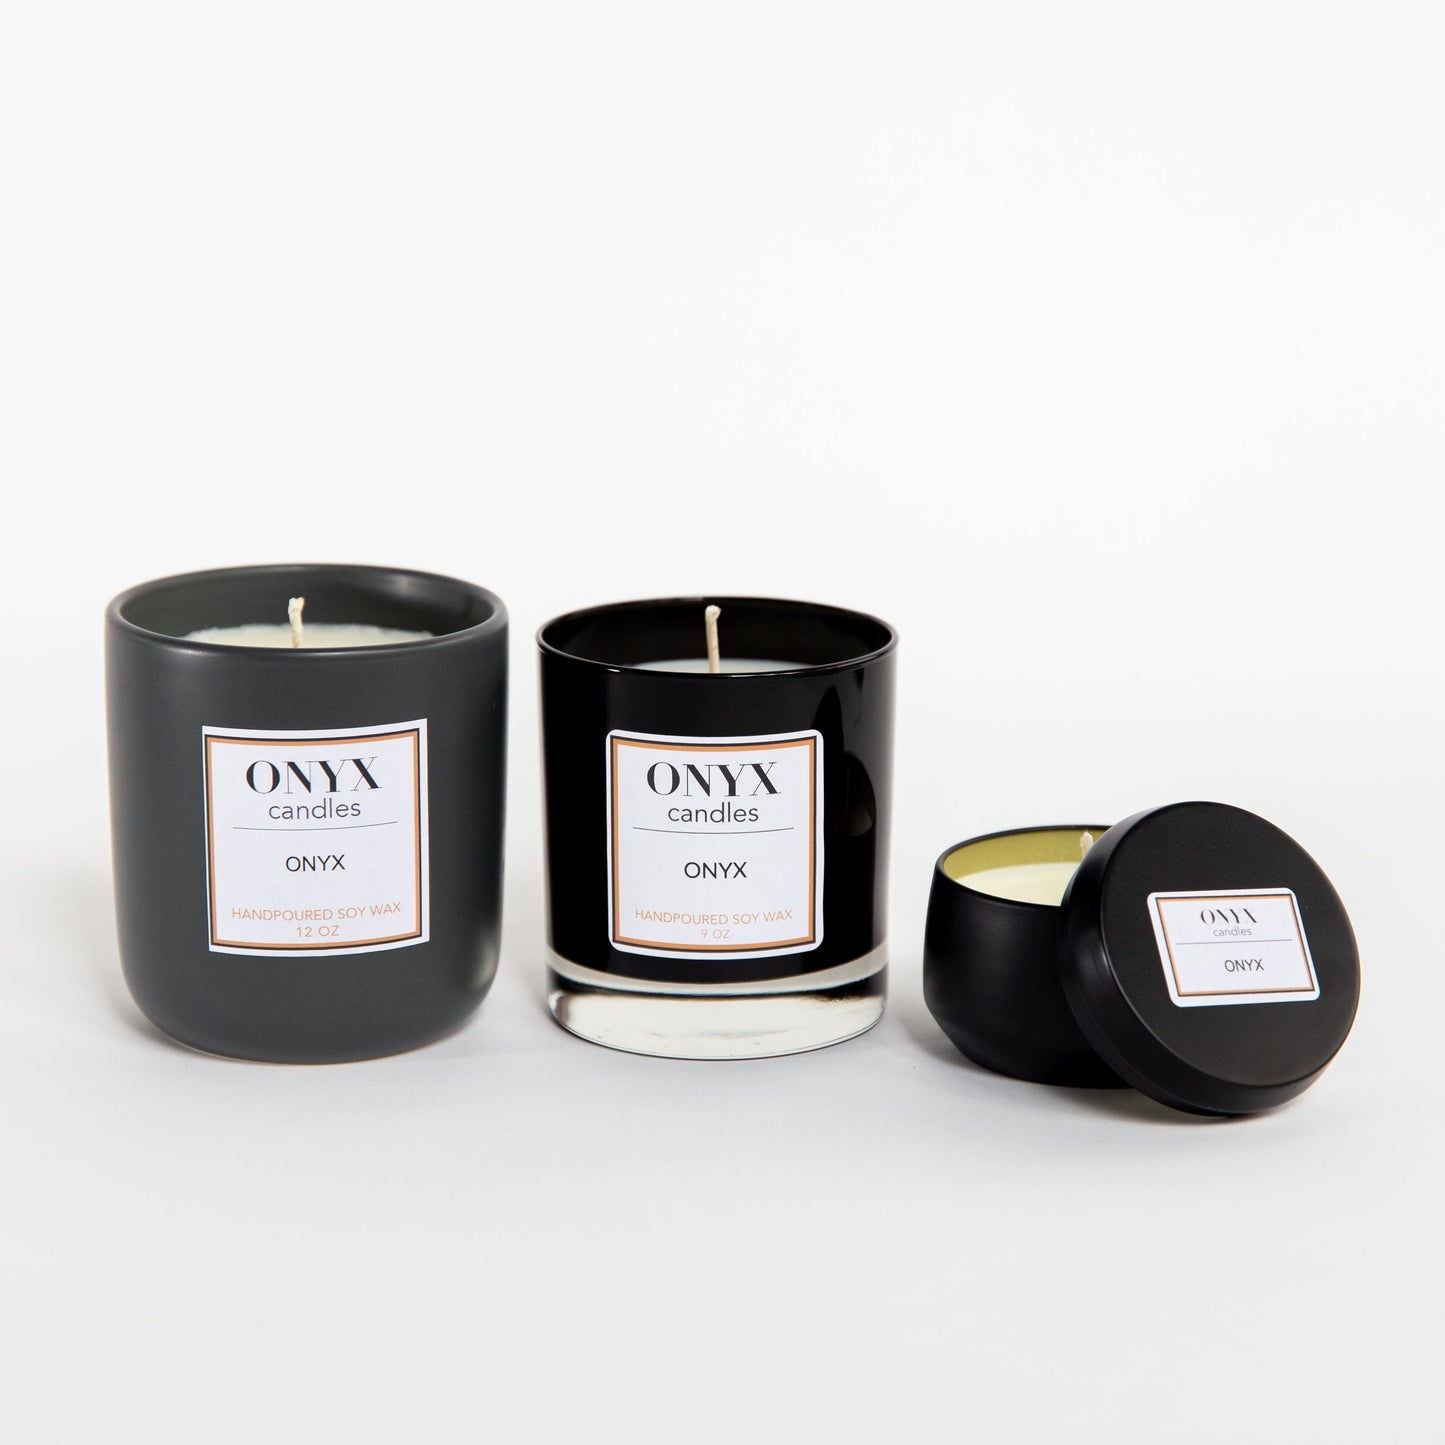 Pictured left to right, the Onyx signature scent in a 12 oz matte black ceramic jar, a 9 oz black glass jar, and a 4 oz matte black tin